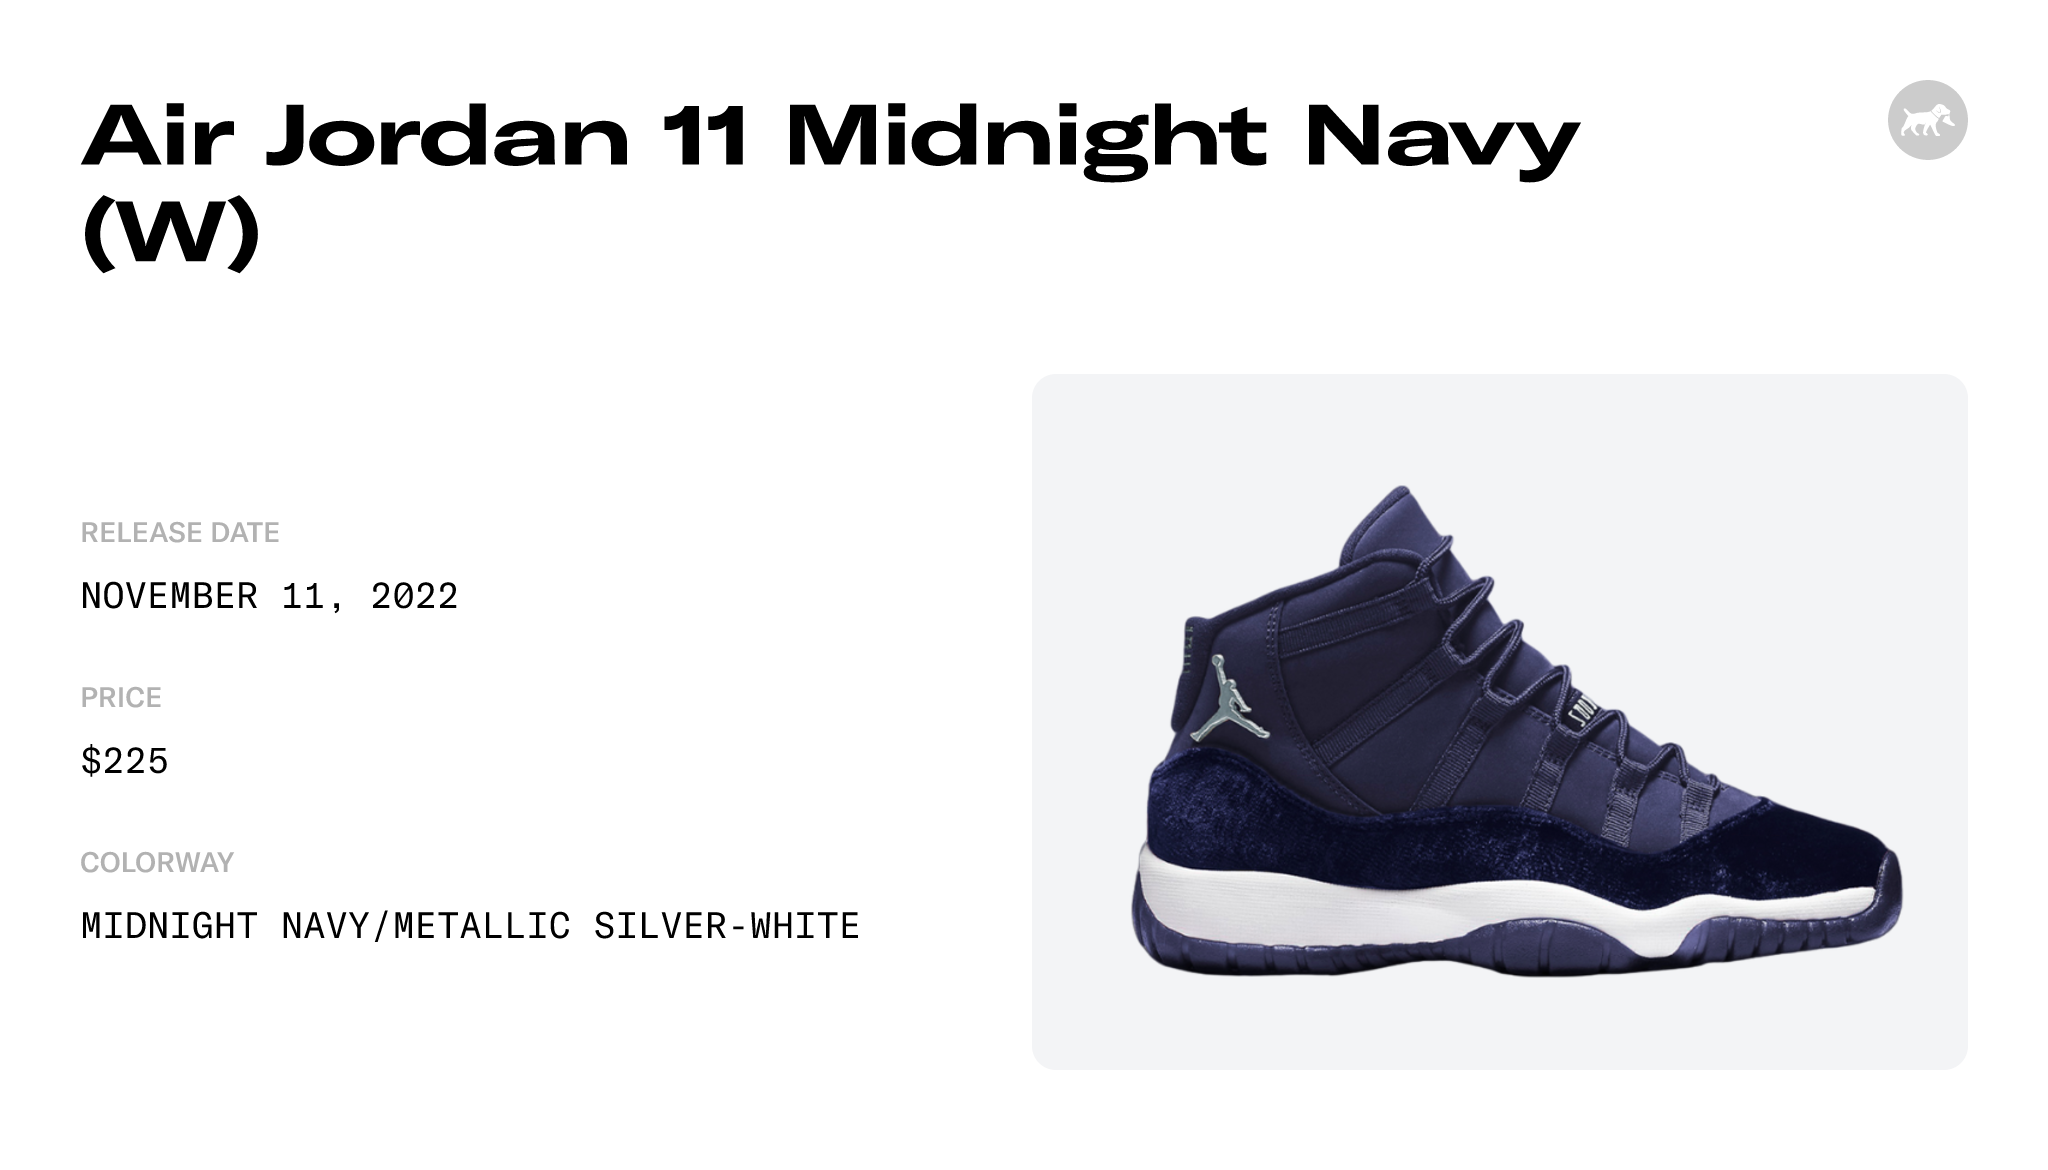 Air Jordan 11 Low Midnight Navy - Air Jordans, Release Dates & More